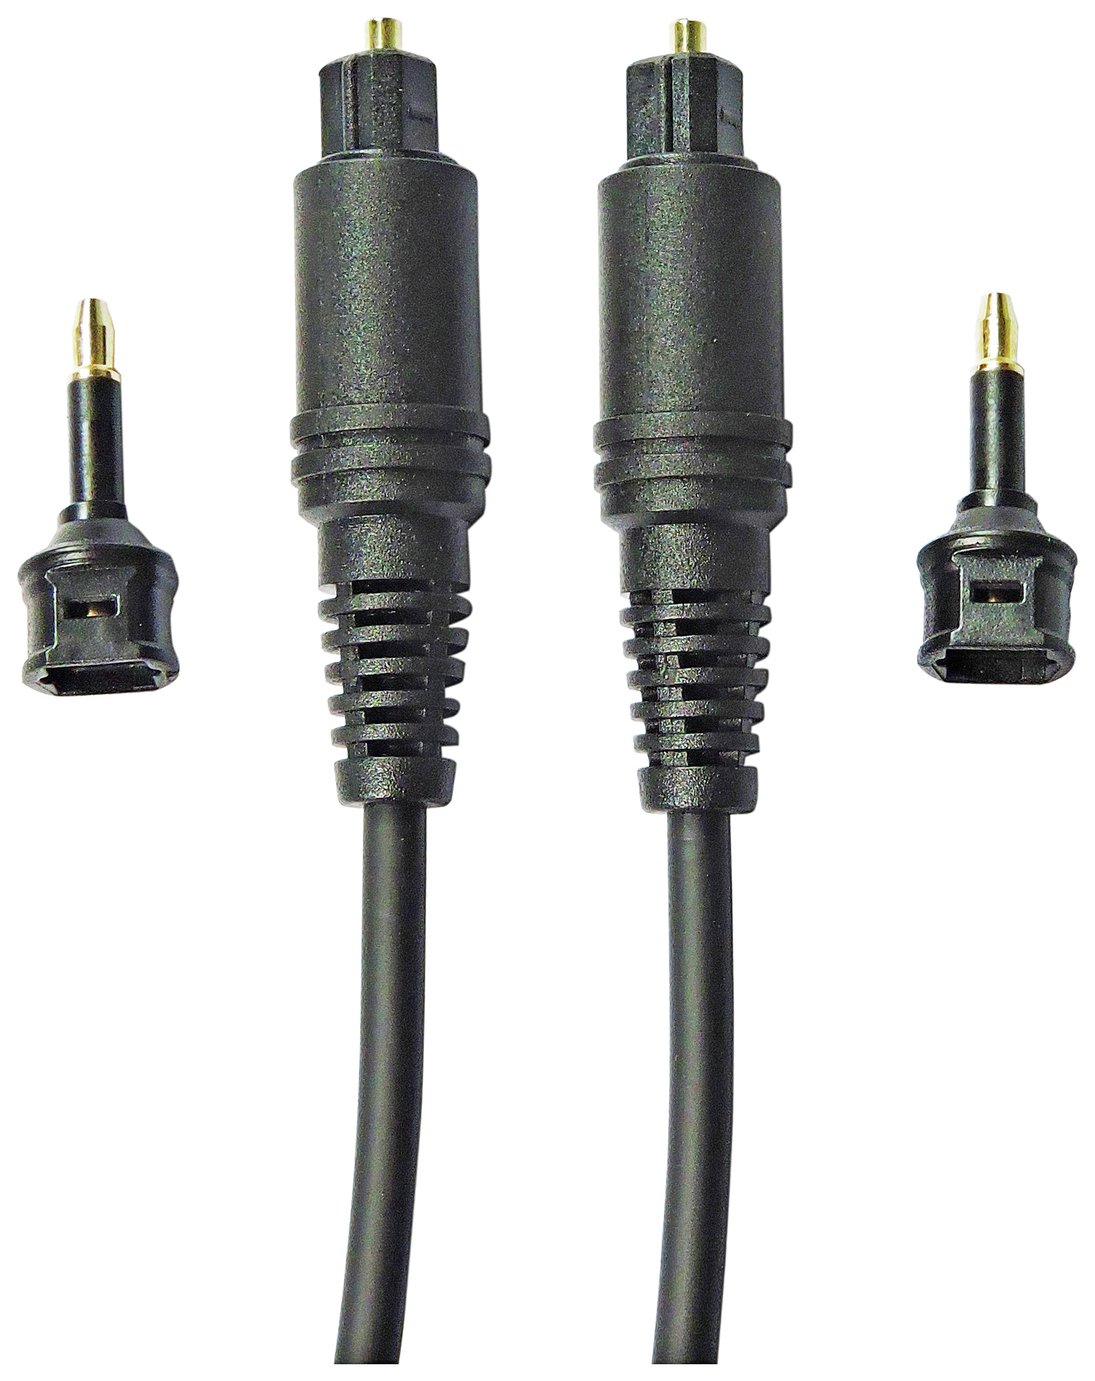 1m Audio Optical Cable - Black